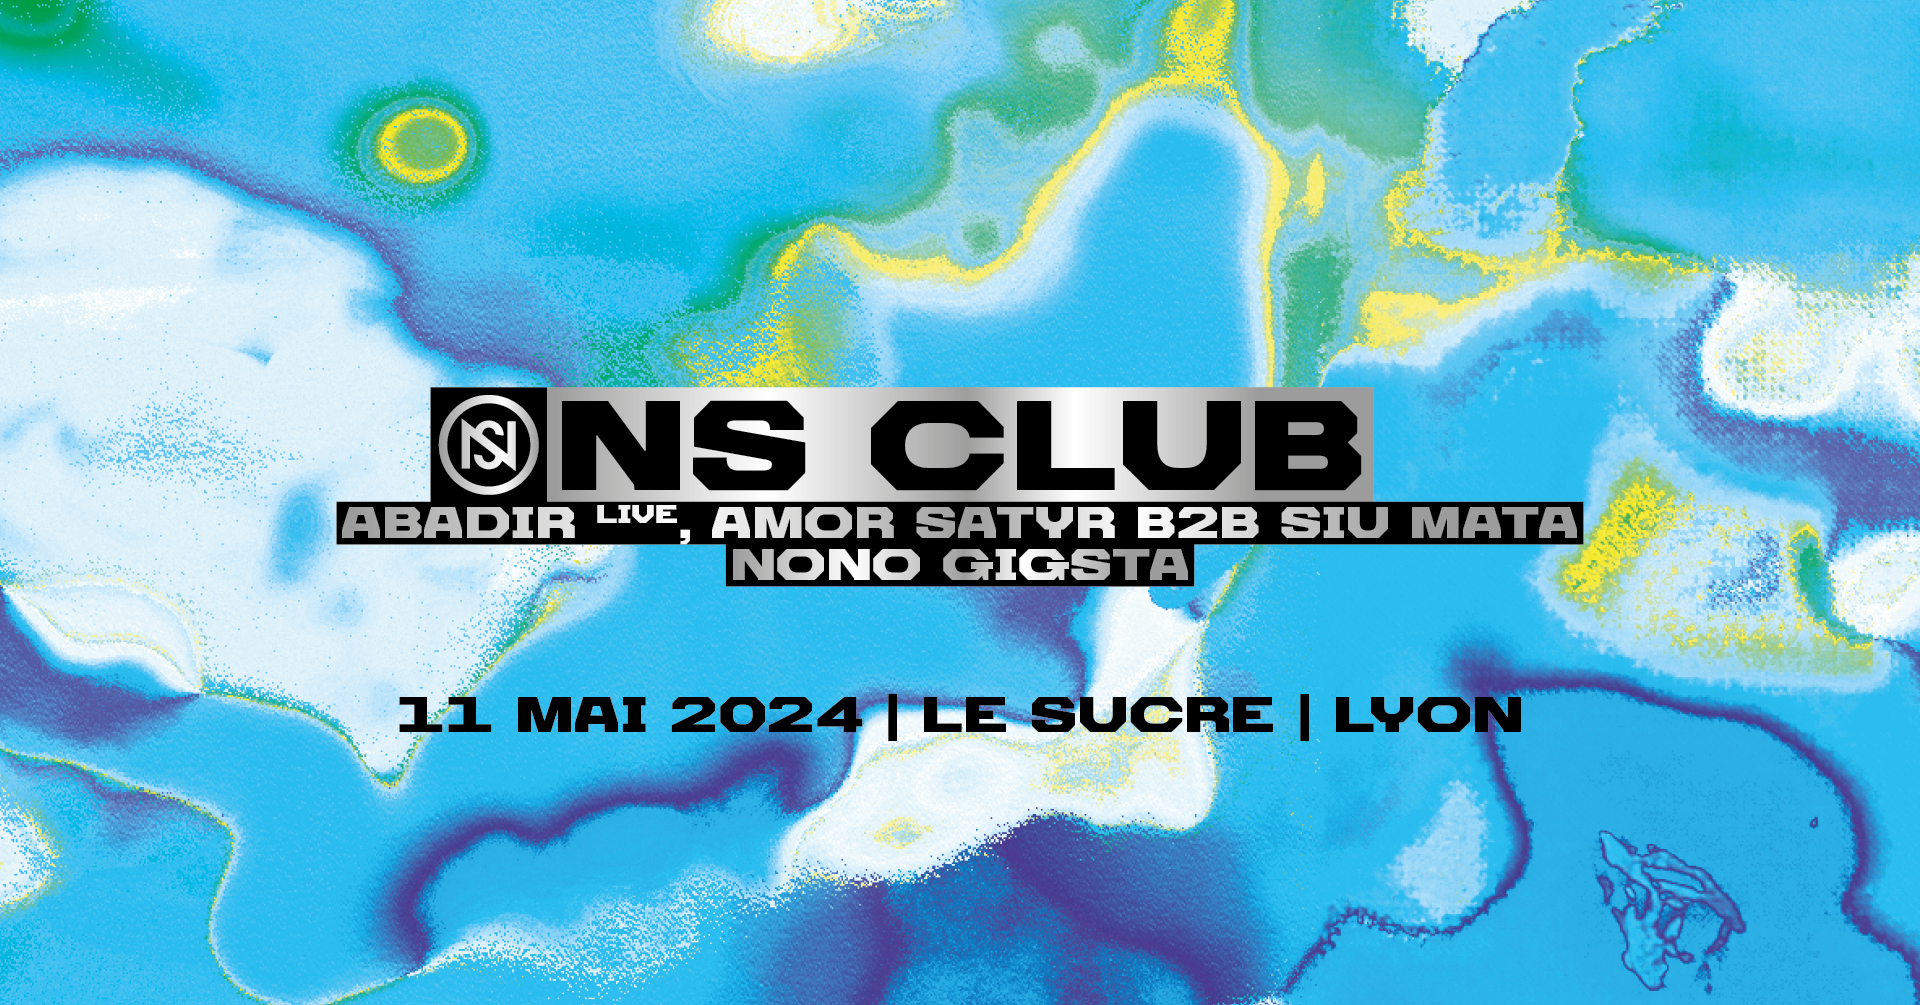 Ns Club: ABADIR (live) / Amor Satyr / Siu Mata / Nono Gigsta - フライヤー表